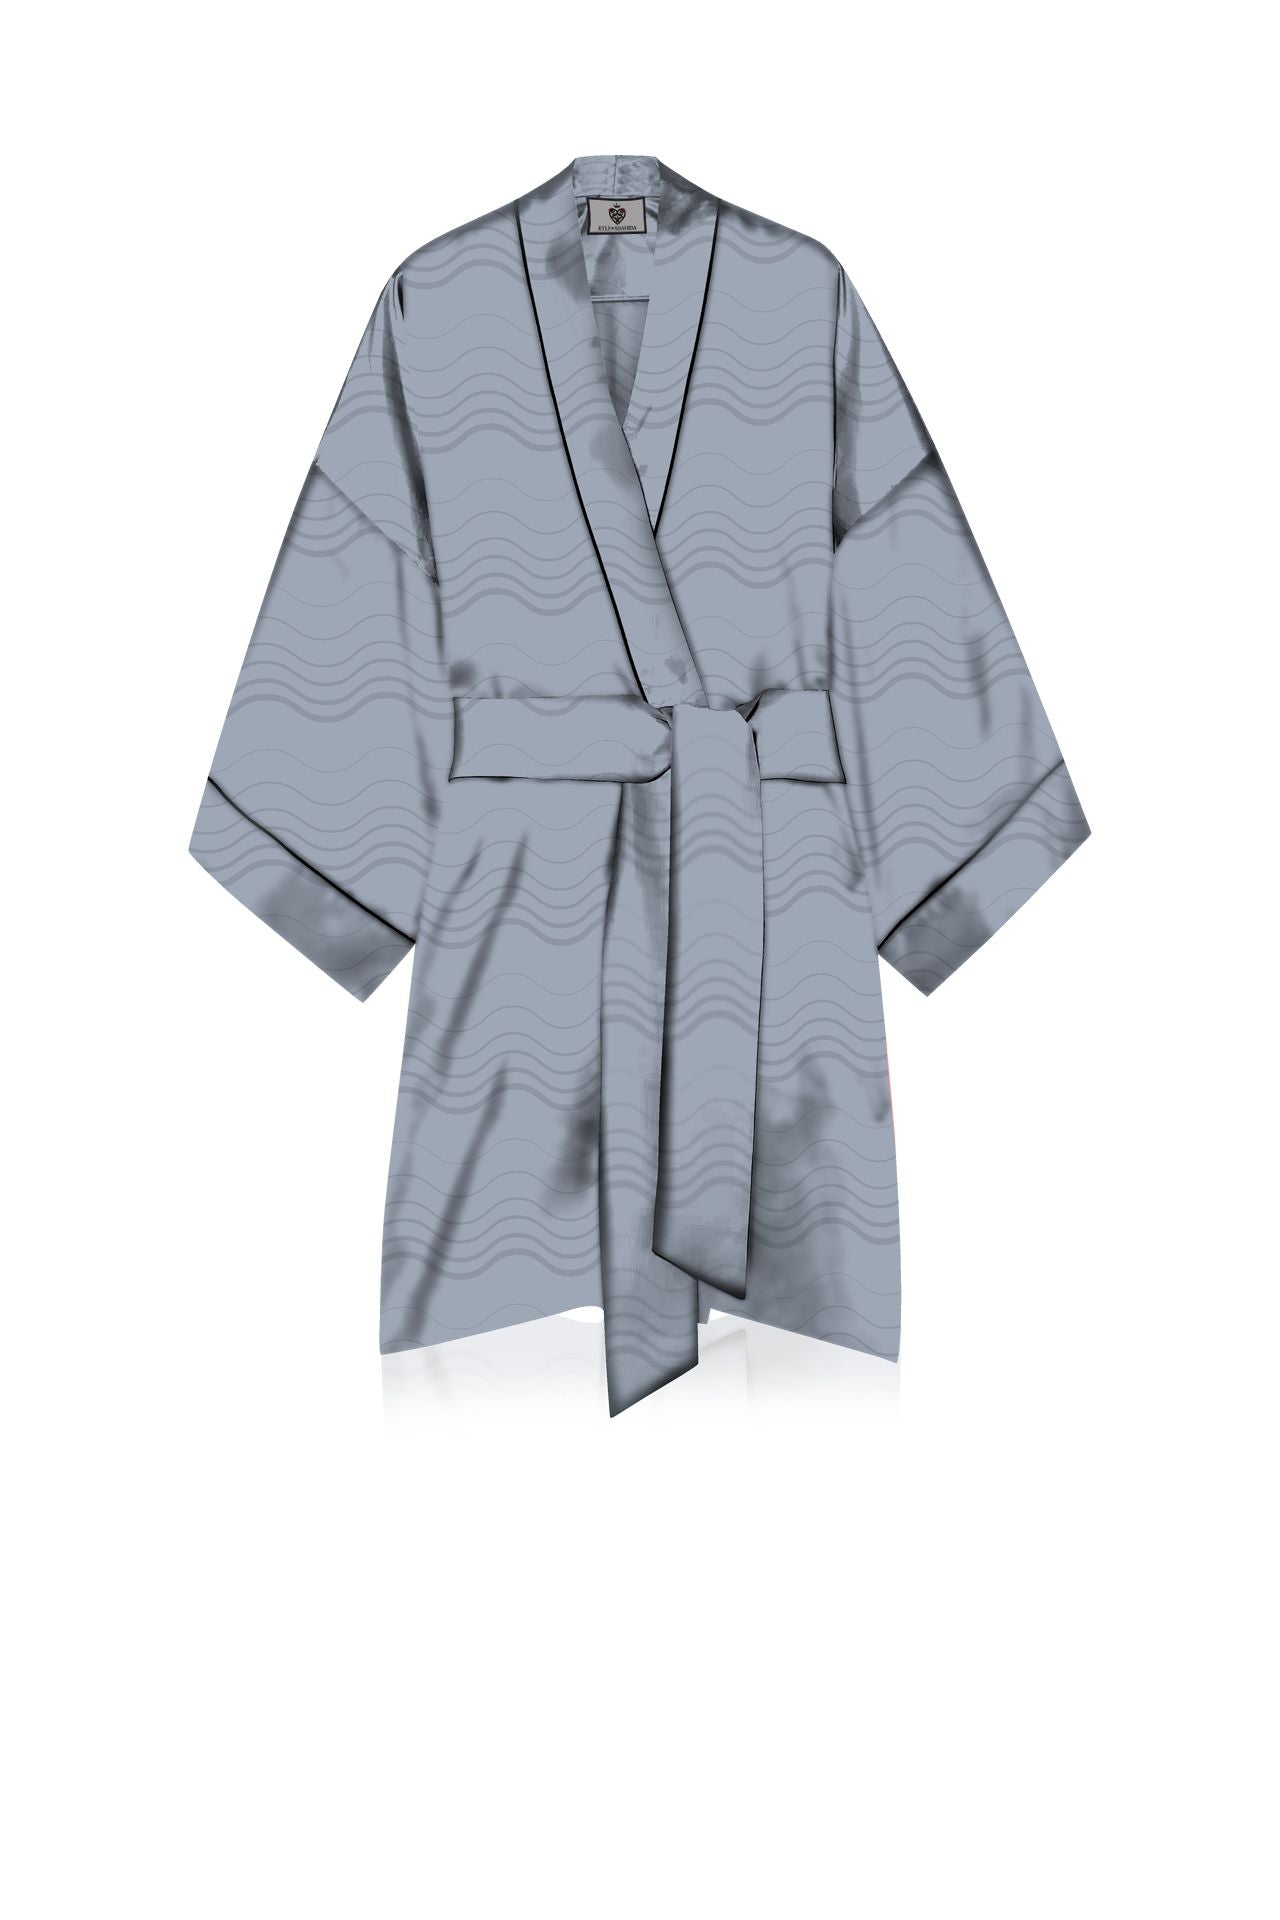  "grey silk robe" "Kyle X Shahida" "womens gray robe" "womens silk robe short" 